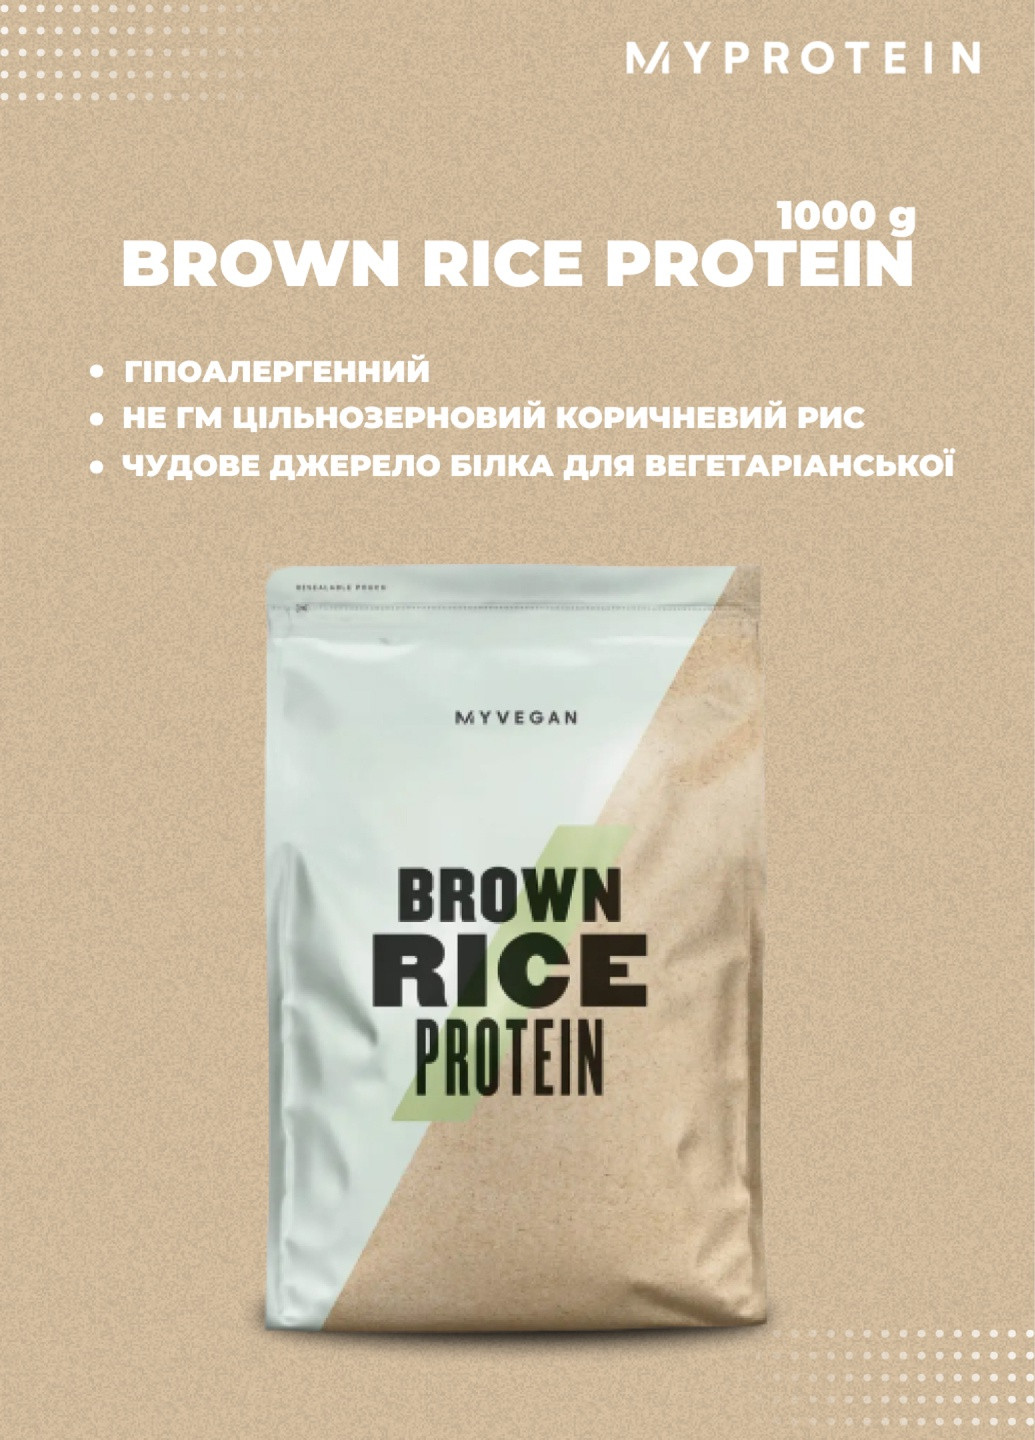 Протеин Brown Rice Protein 1000g Myprotein My Protein (252446707)